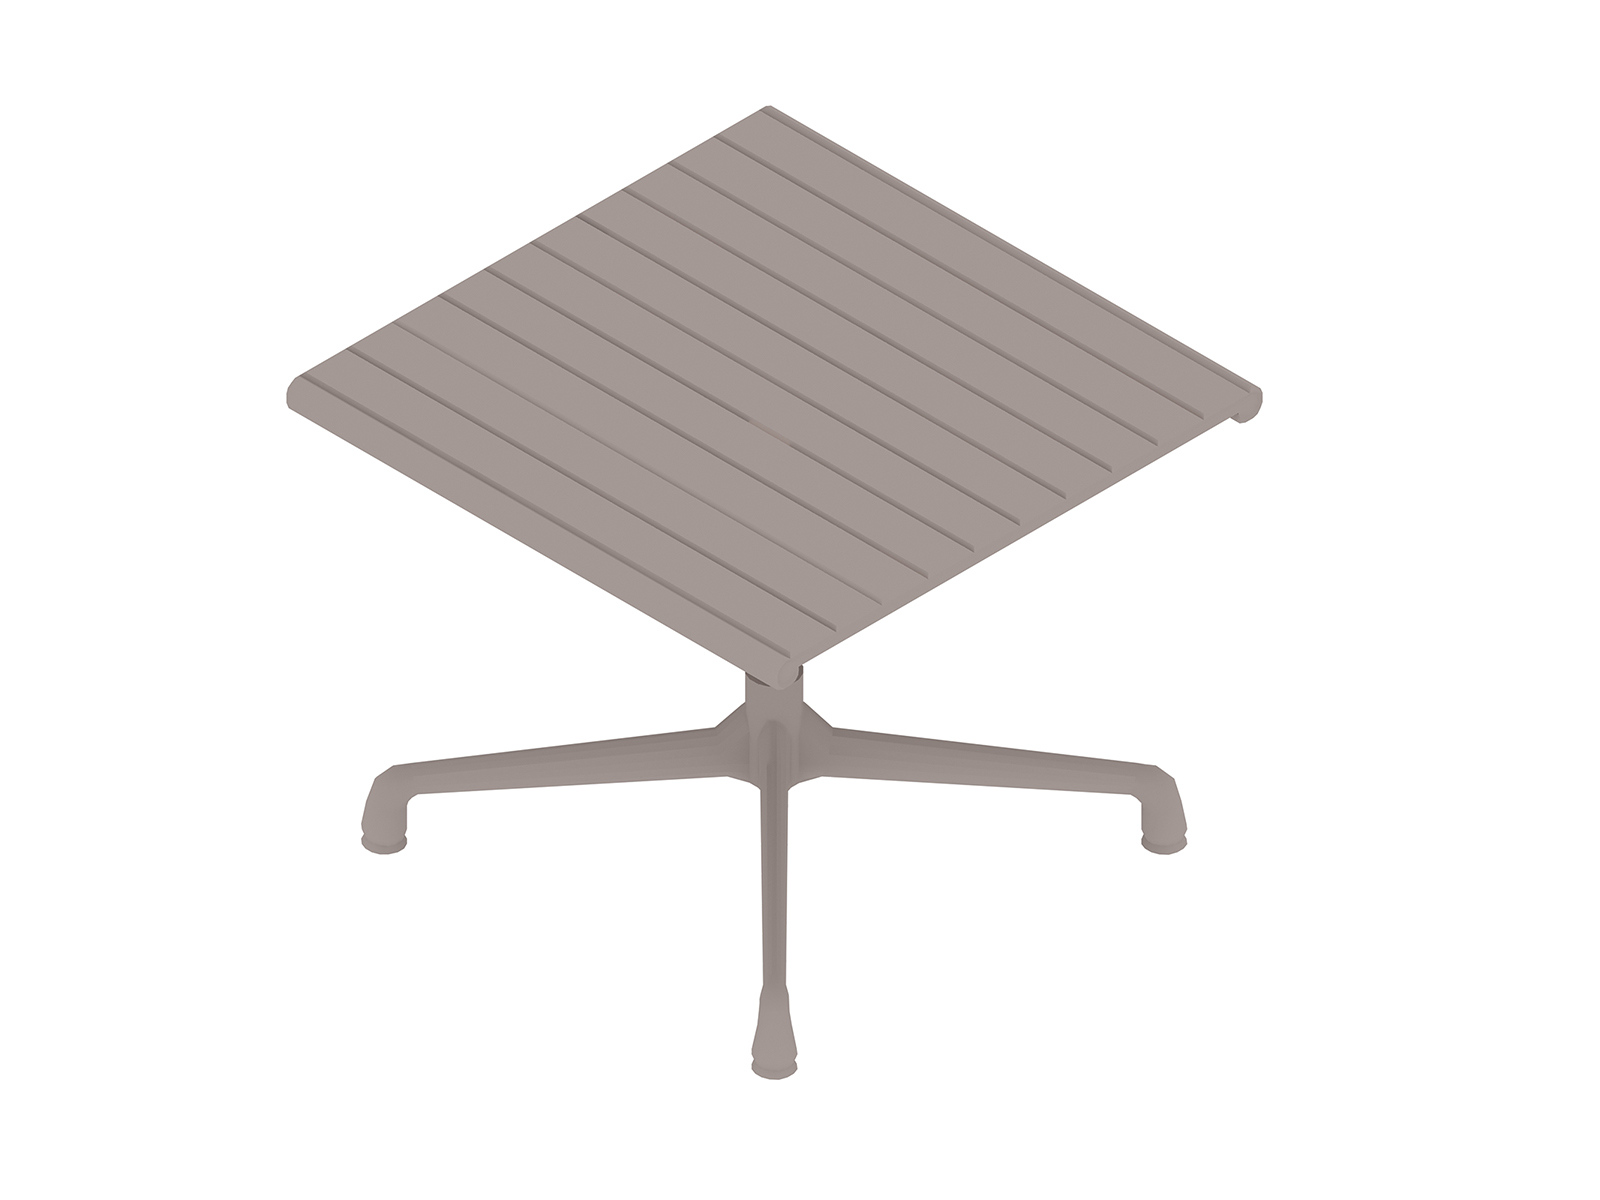 通用渲染图 - Eames Aluminum Group脚凳